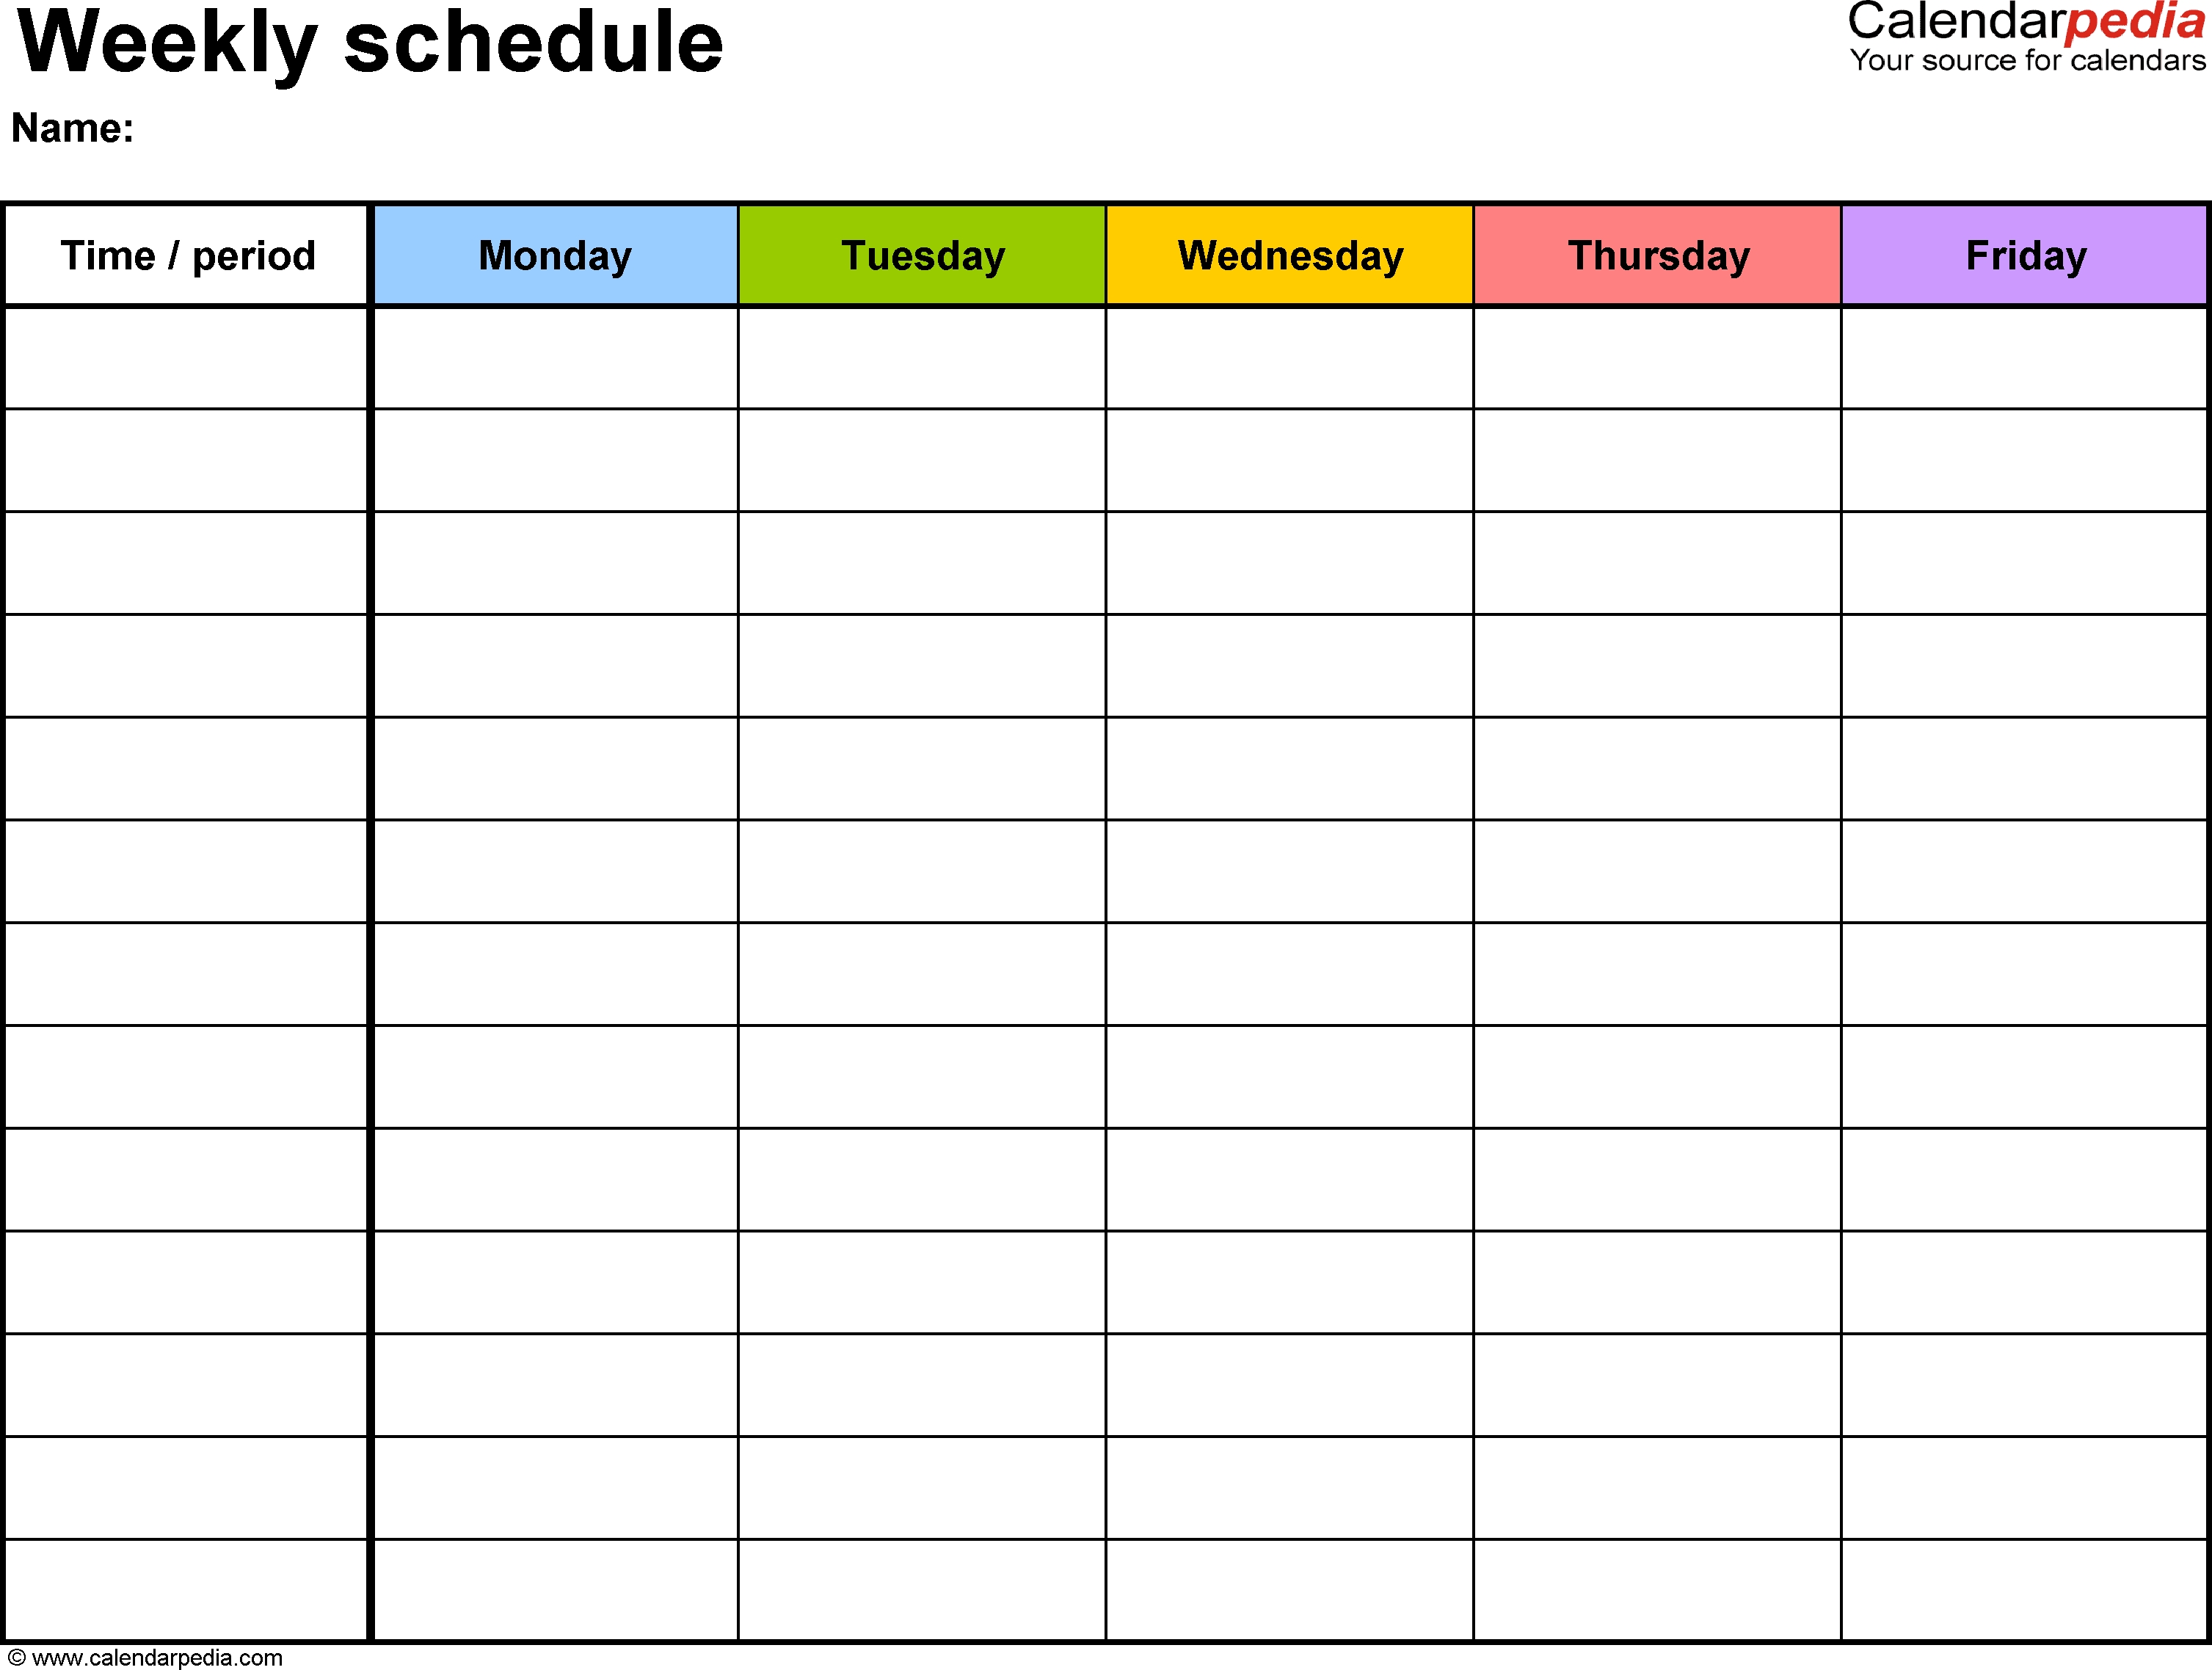 Printable Weekly Planner With Time Slots Calendar 